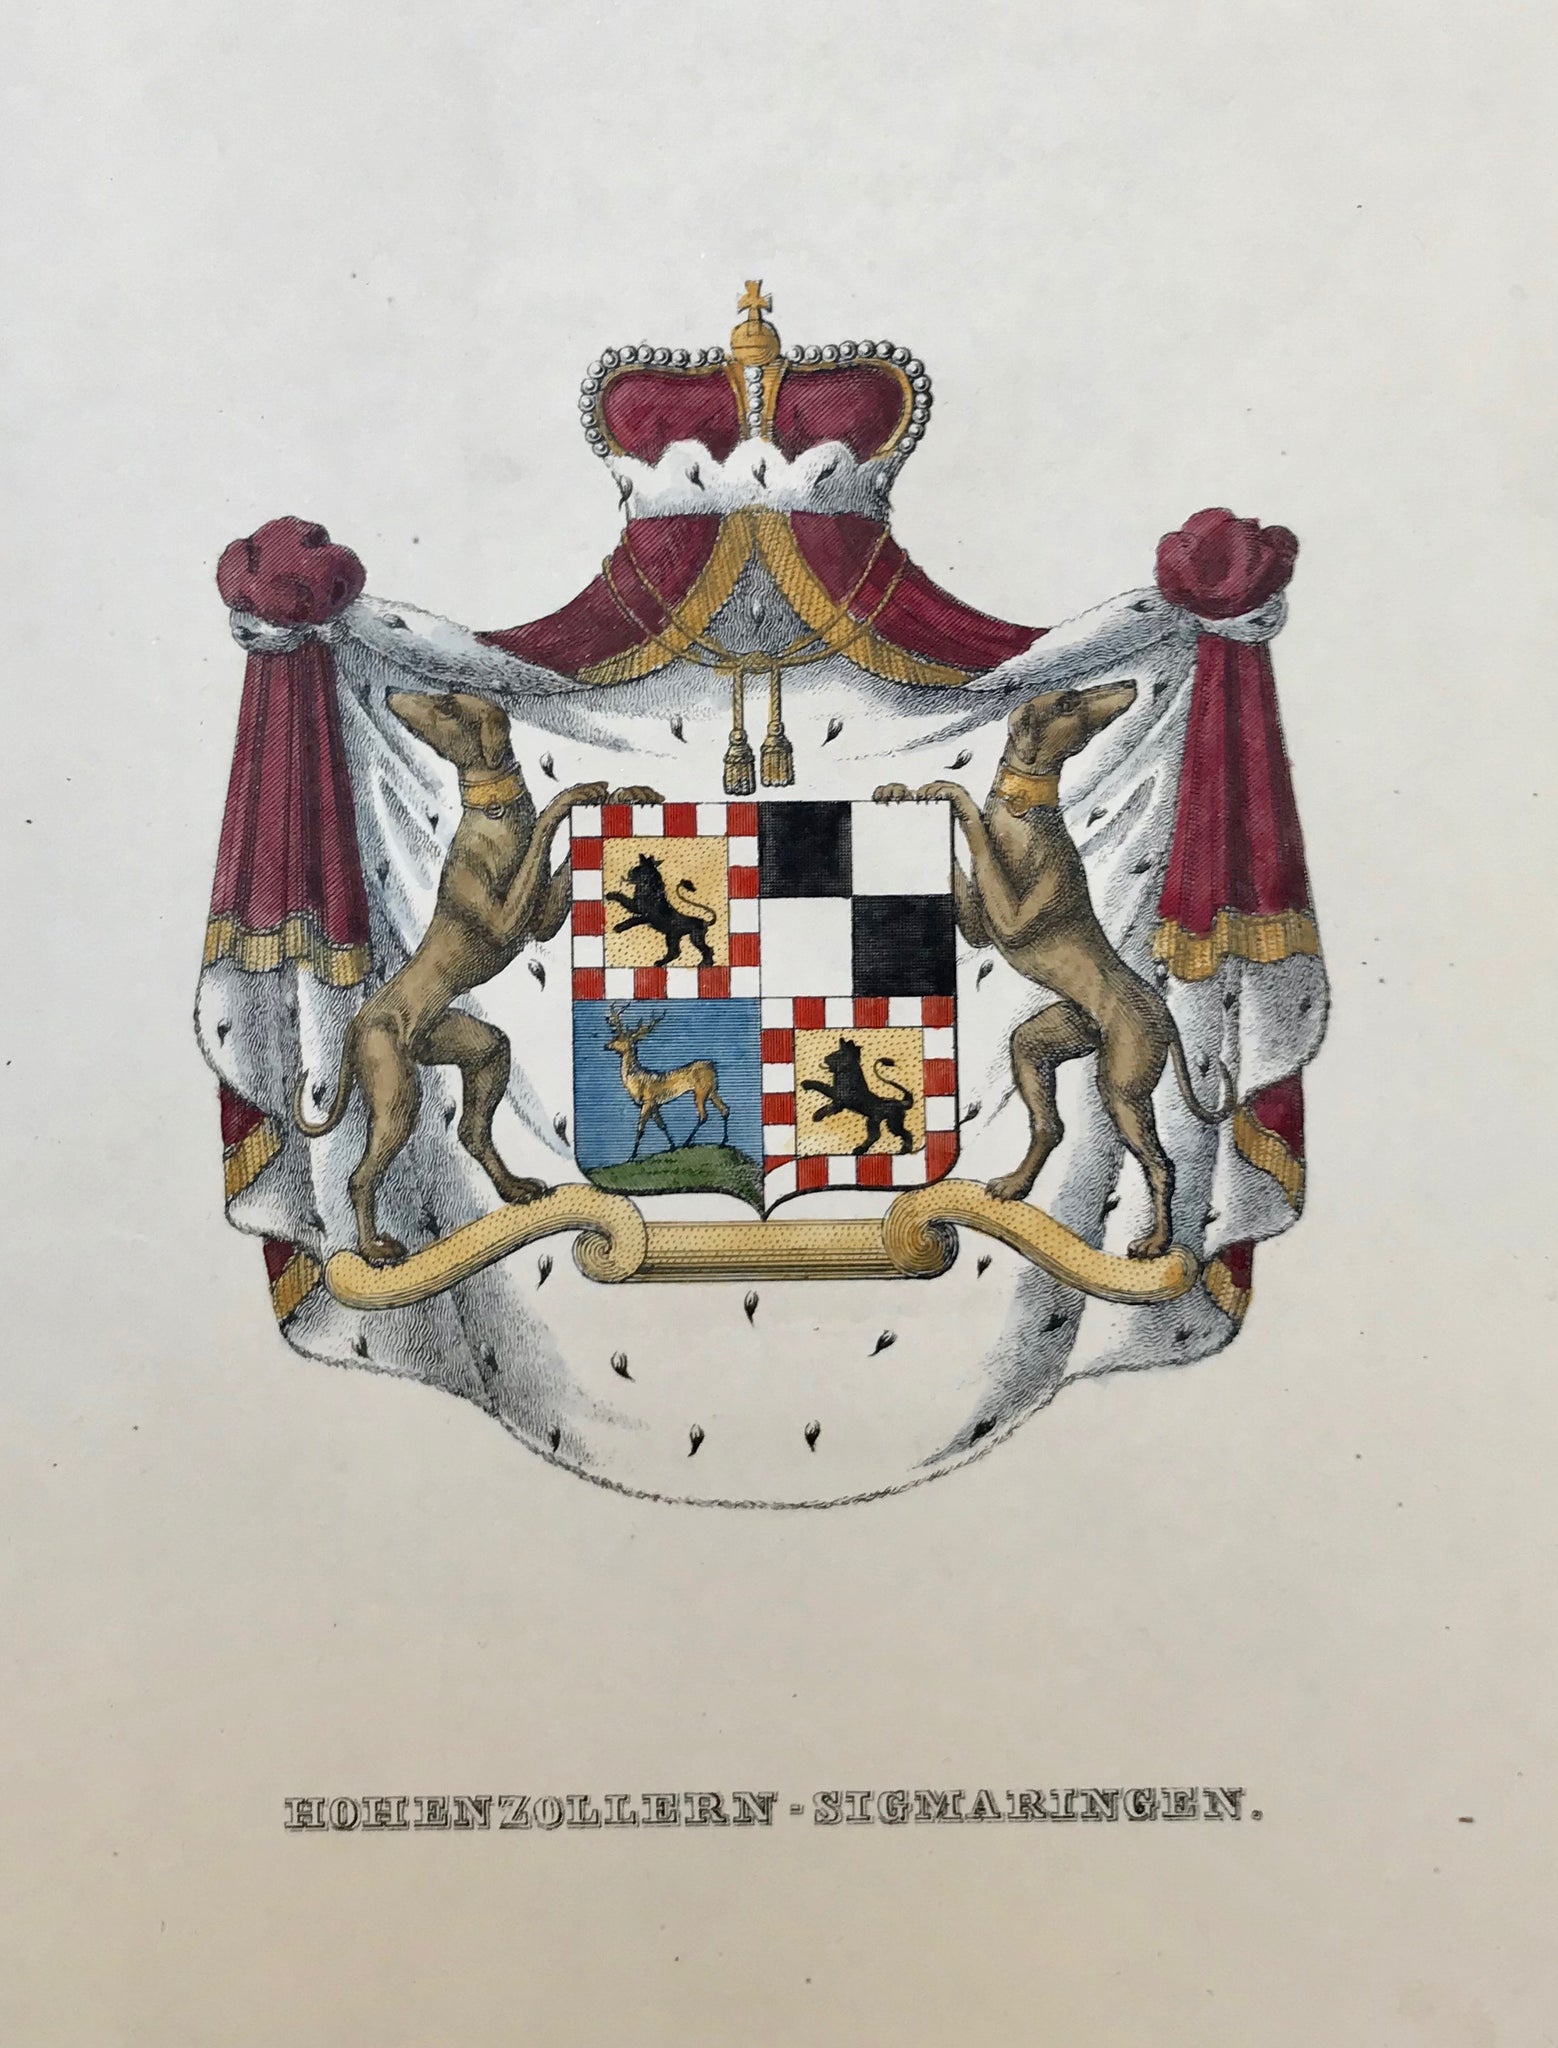 Heraldry: "Hohenzollern-Sigmaringen"  "Grossbritannien" (Great Britain)  Lithograph in original hand coloring, ca 1850.